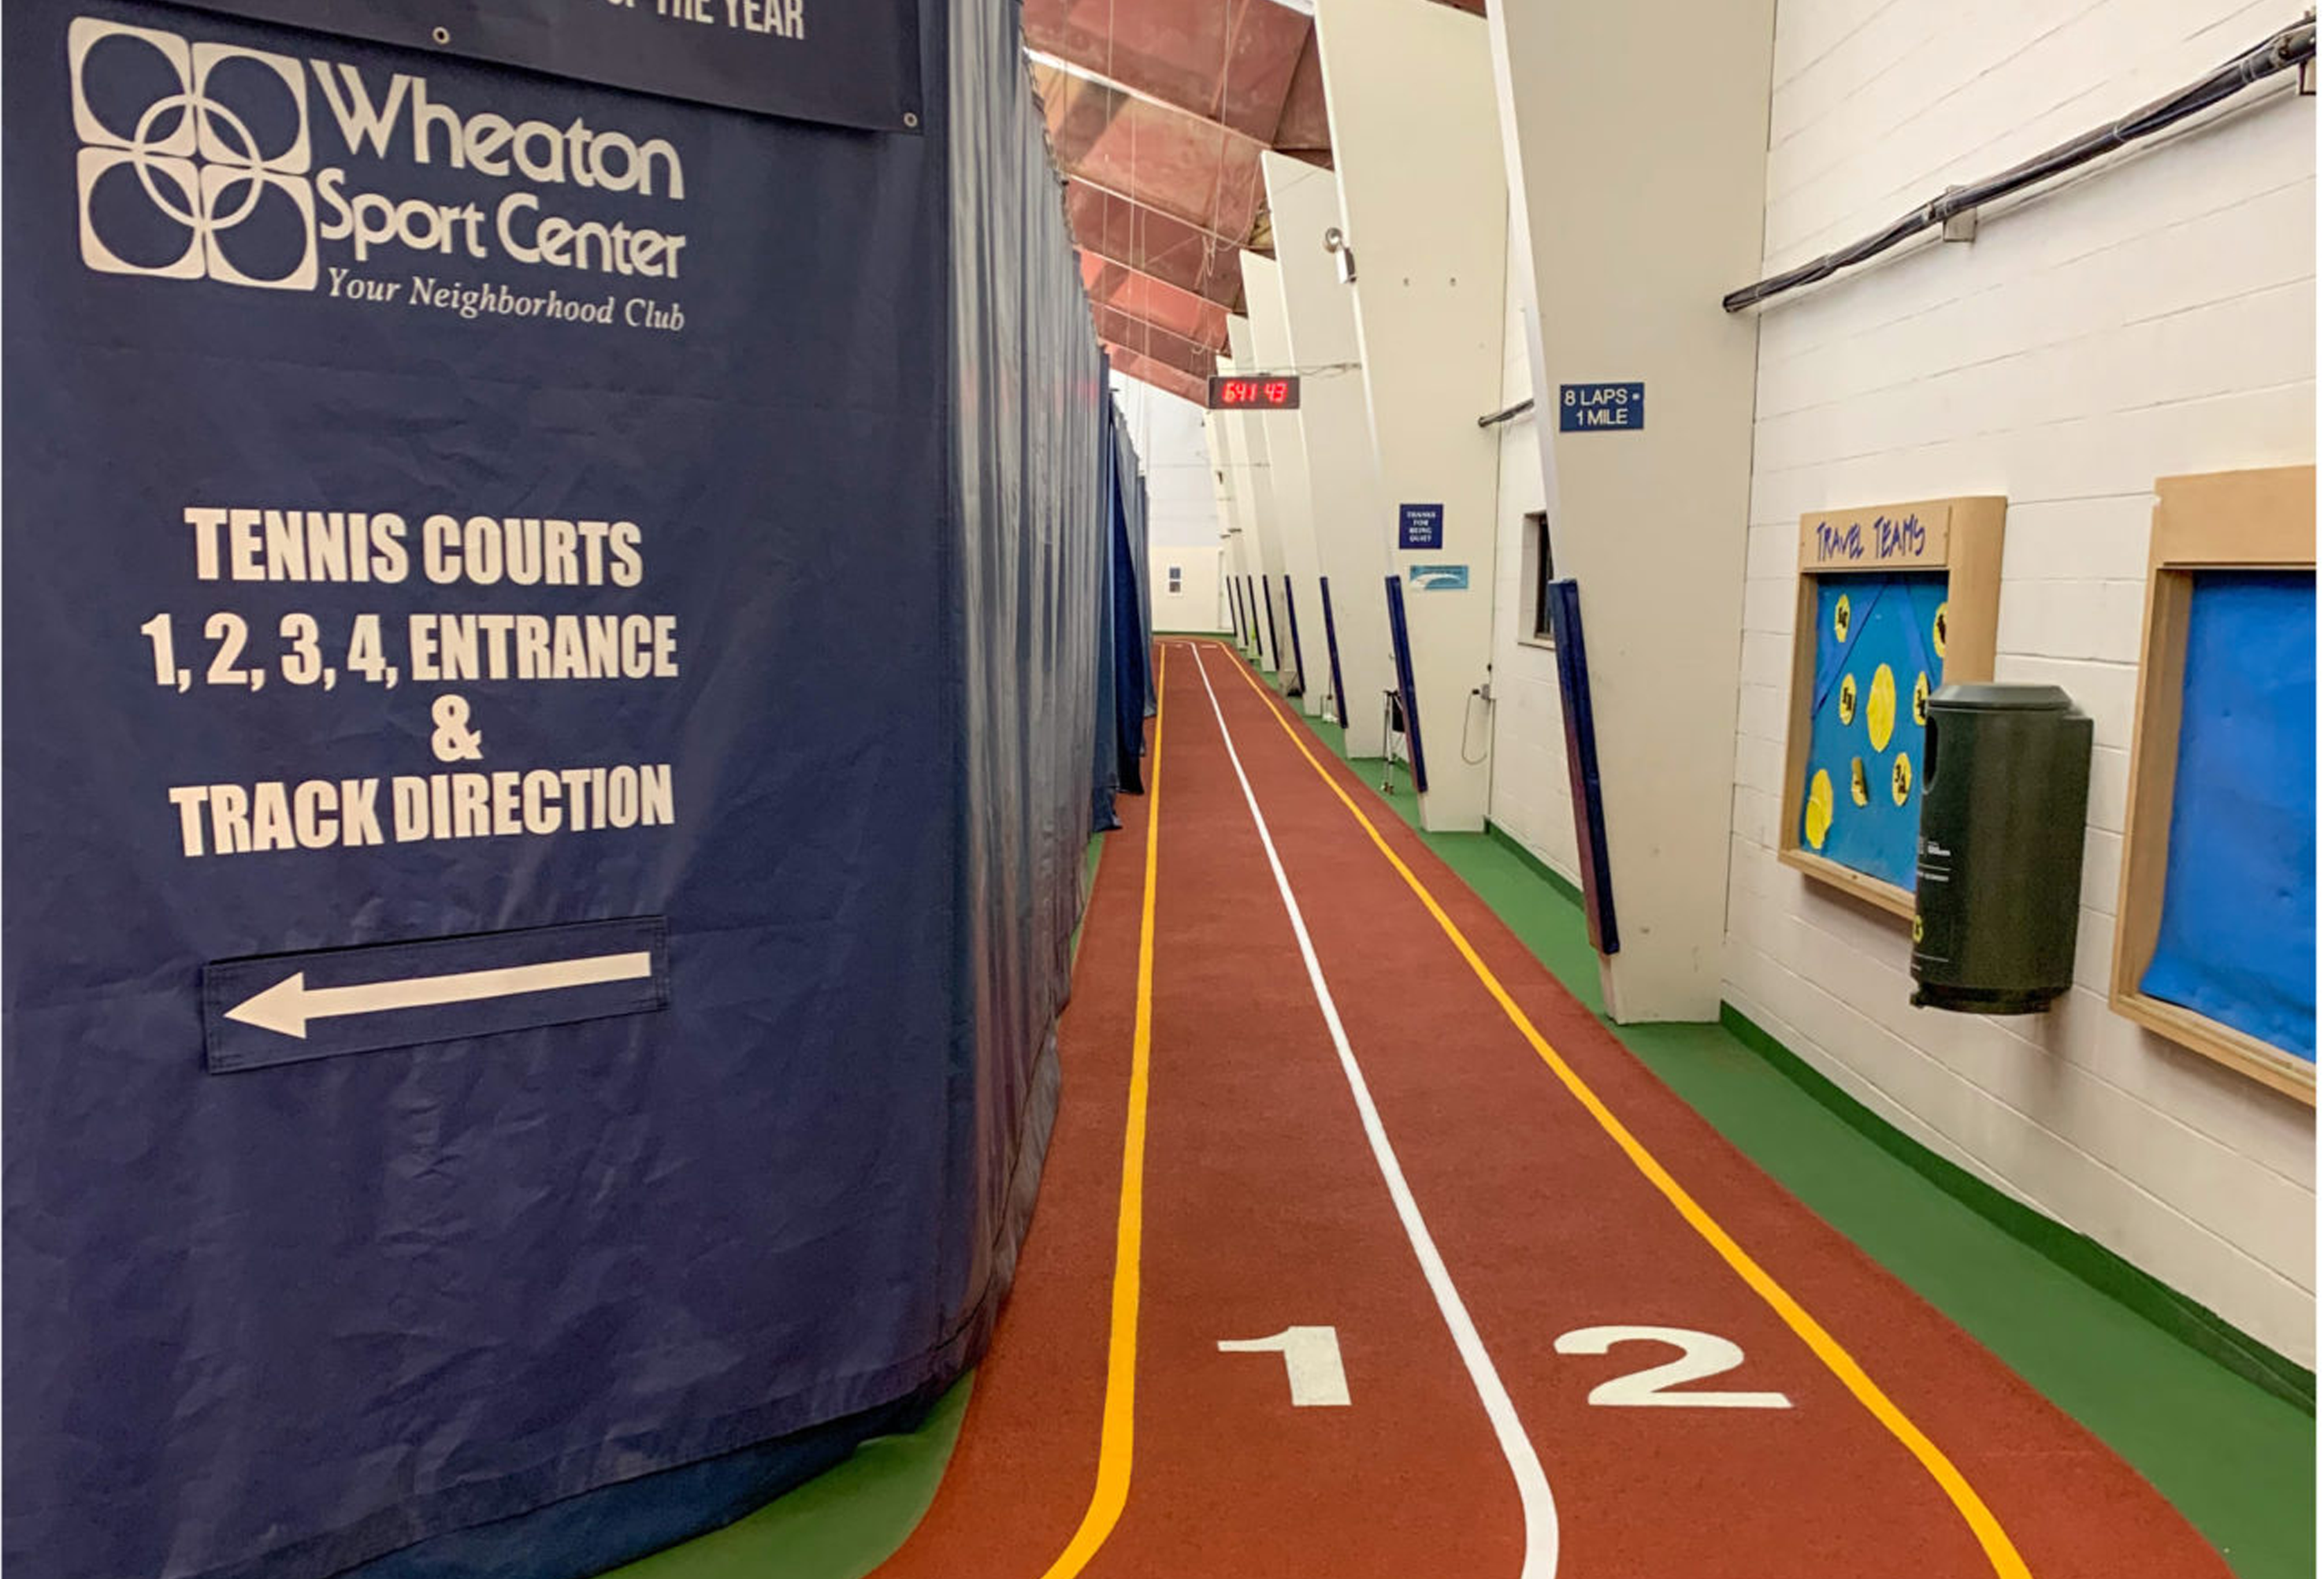 Wheaton Sport Center Indoor Track. 1.8 mile track. Run/walk all year indoors.